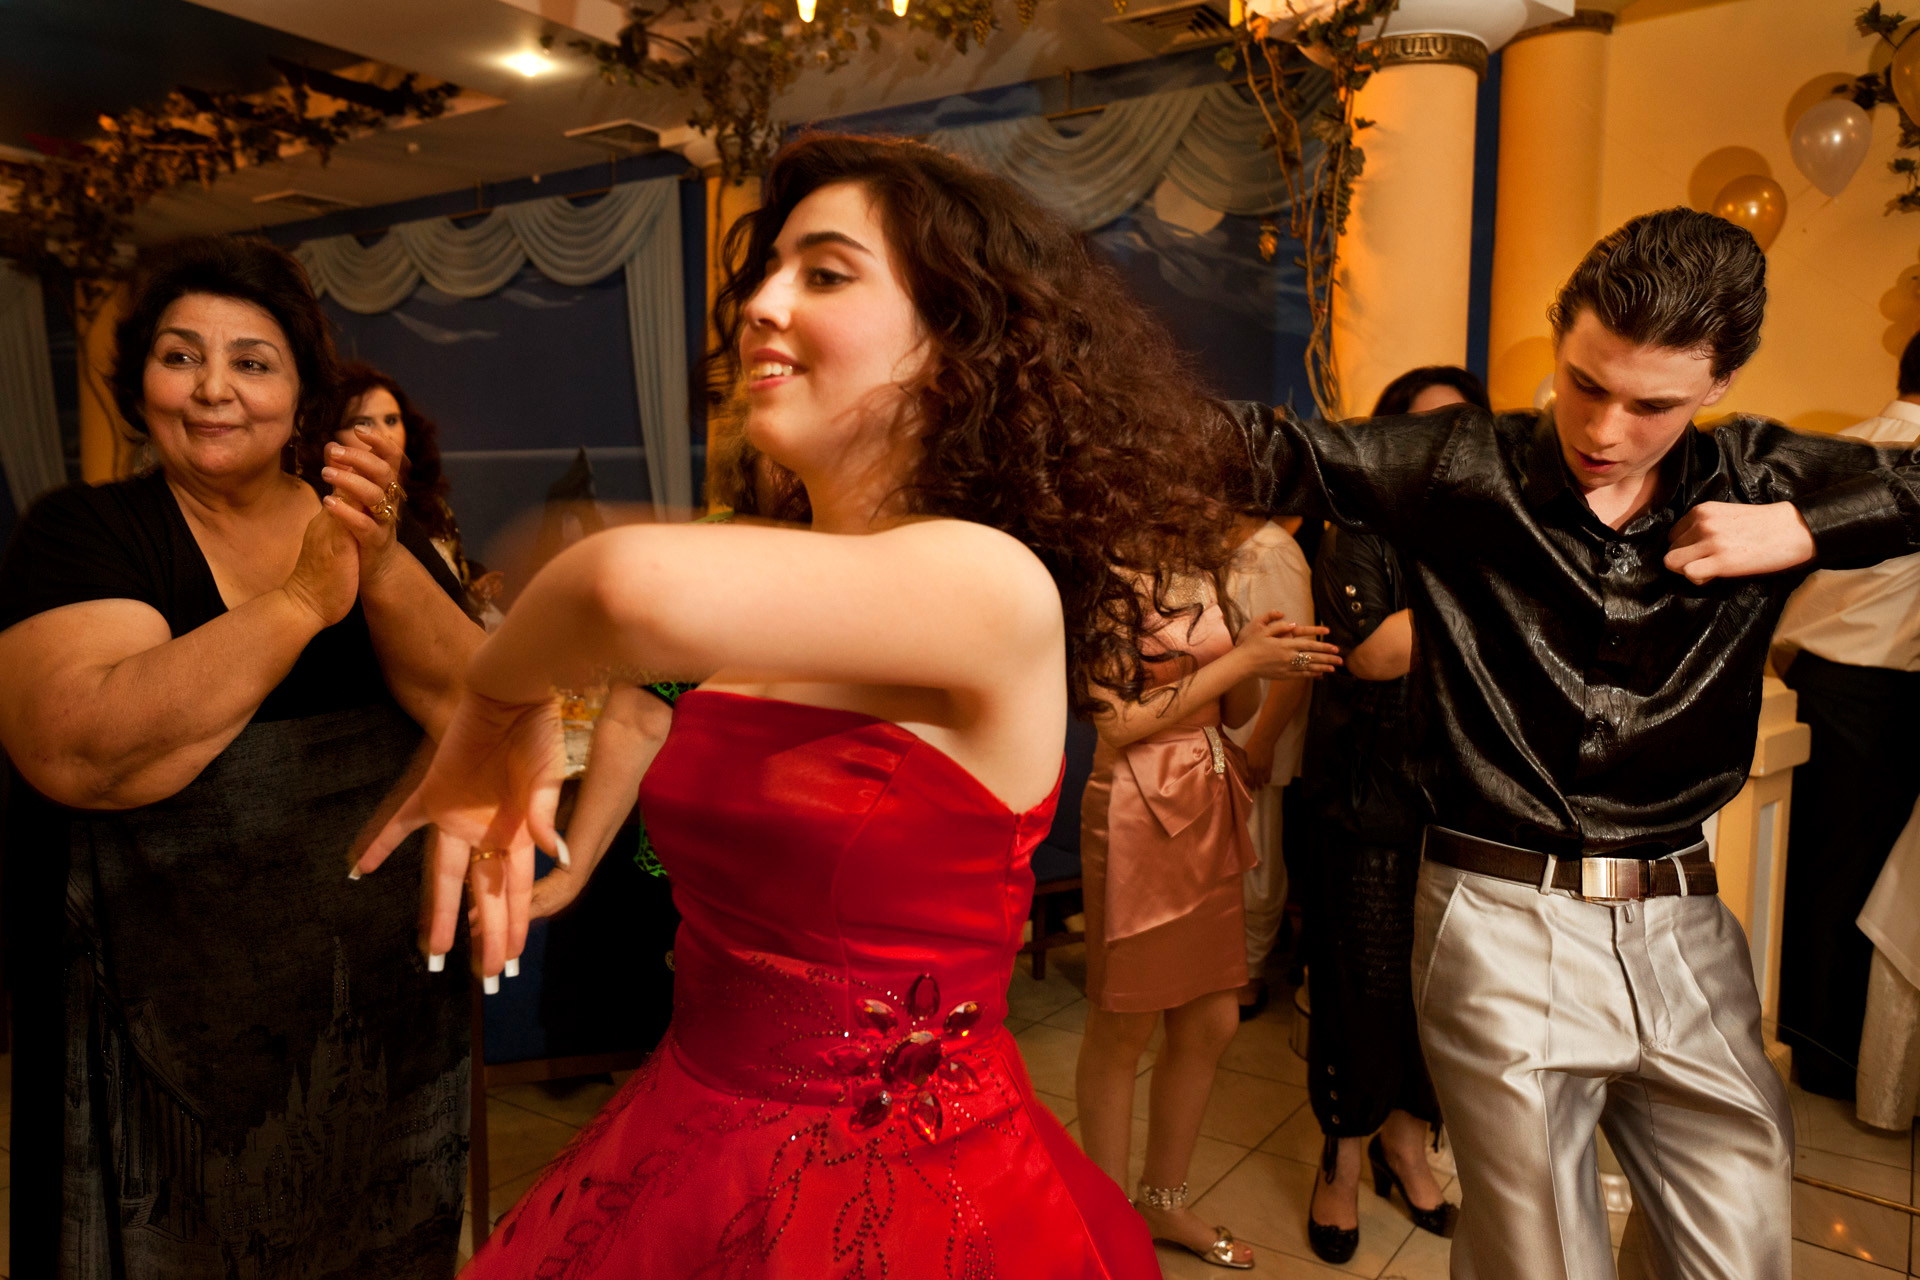  Much dancing and celebration accompany a traditional Tatar wedding.  Simferopol, Crimea  